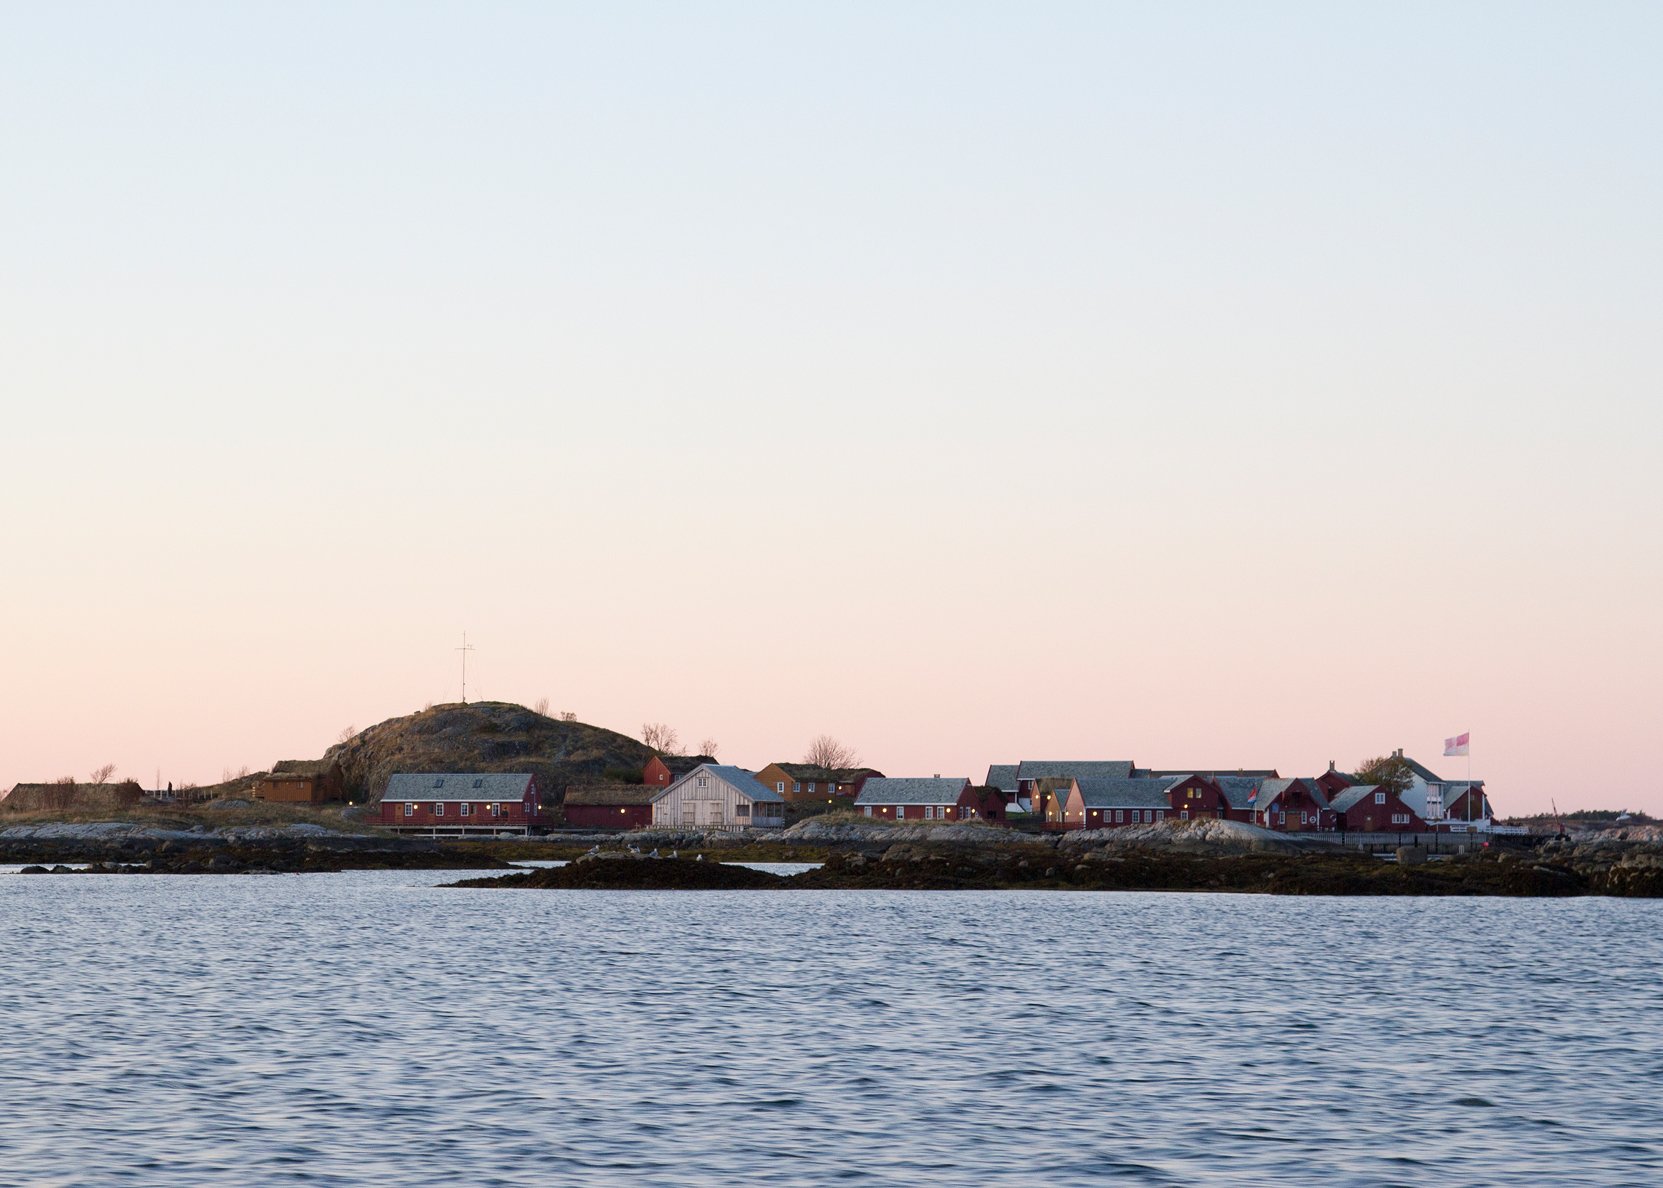 Håholmen island in Hustadvika. One of the locations in 2019.